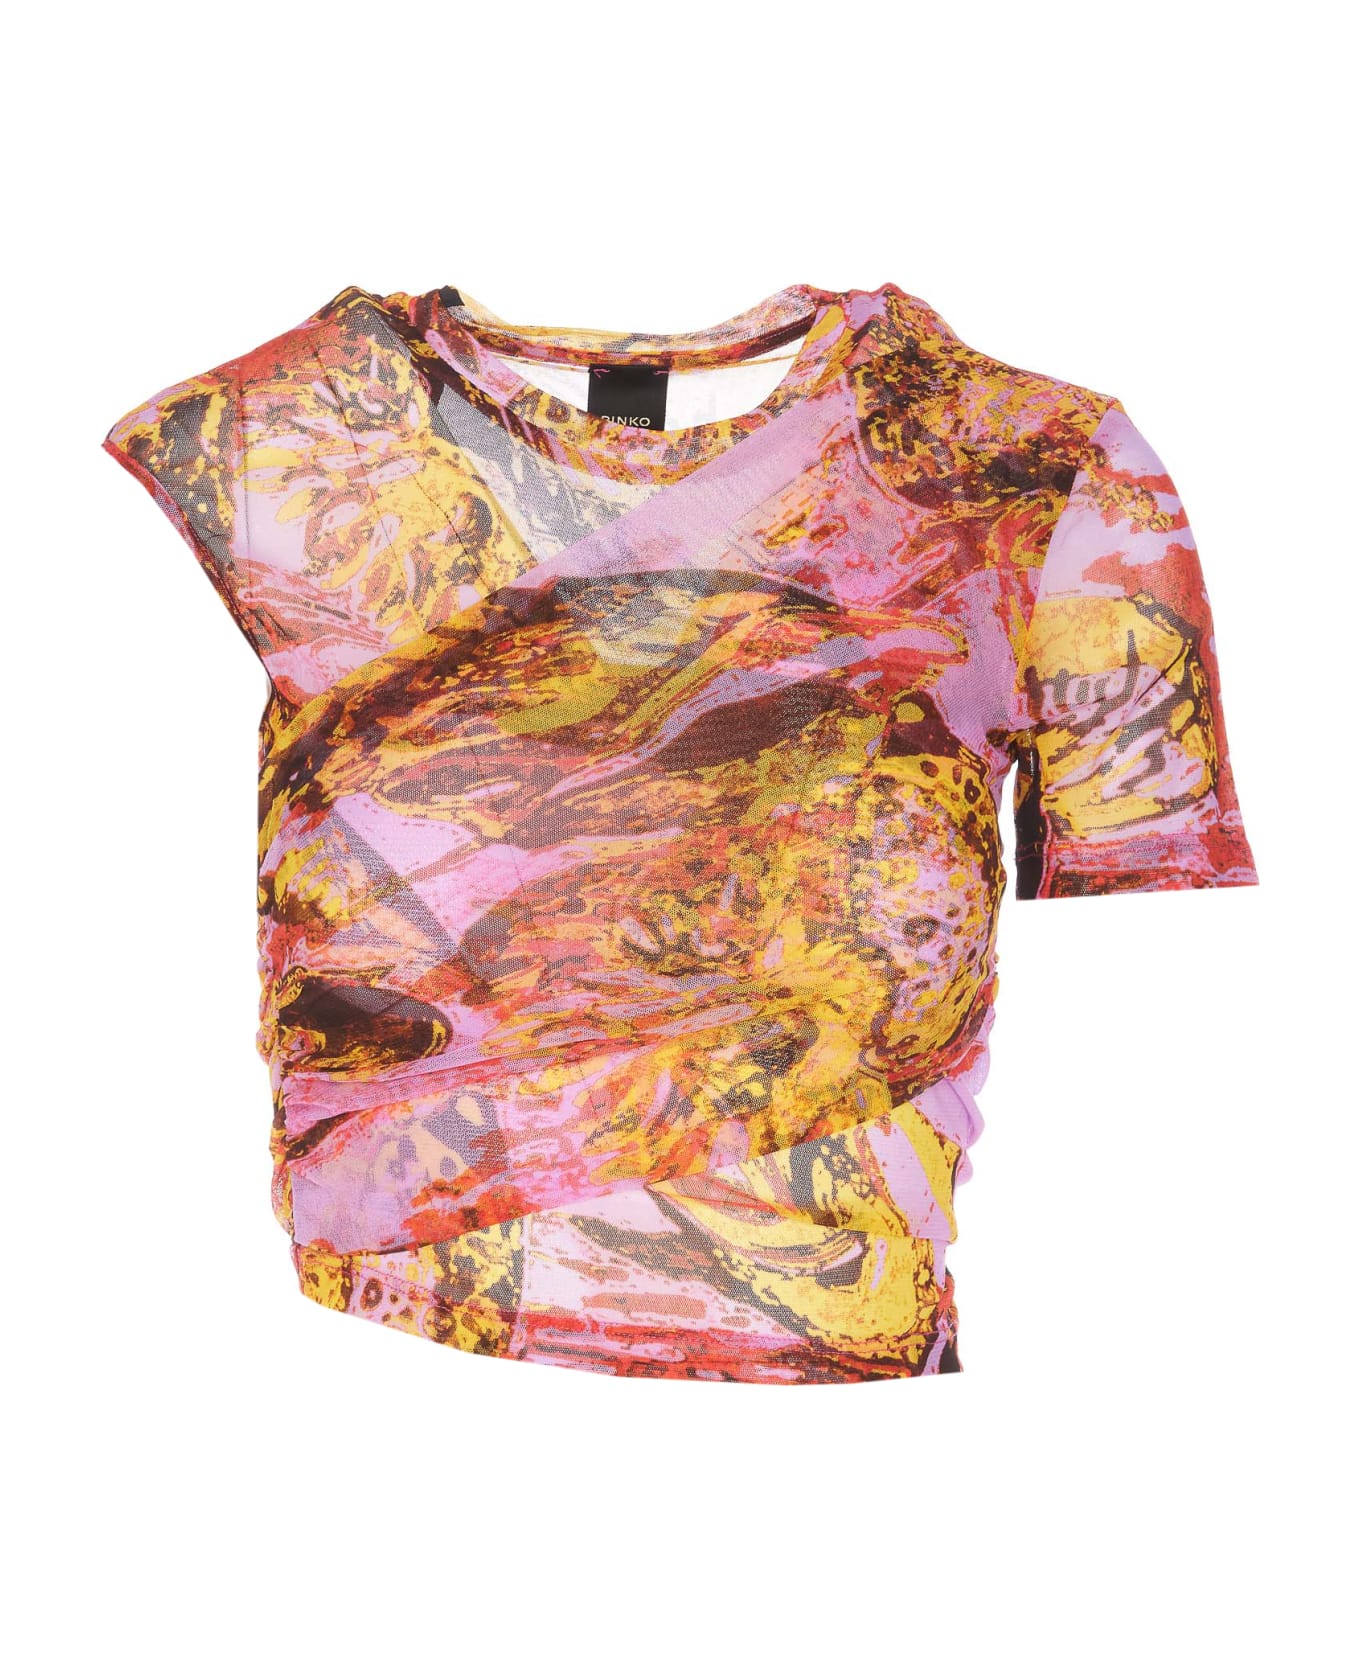 Pinko Tiresia Top - MultiColour Tシャツ